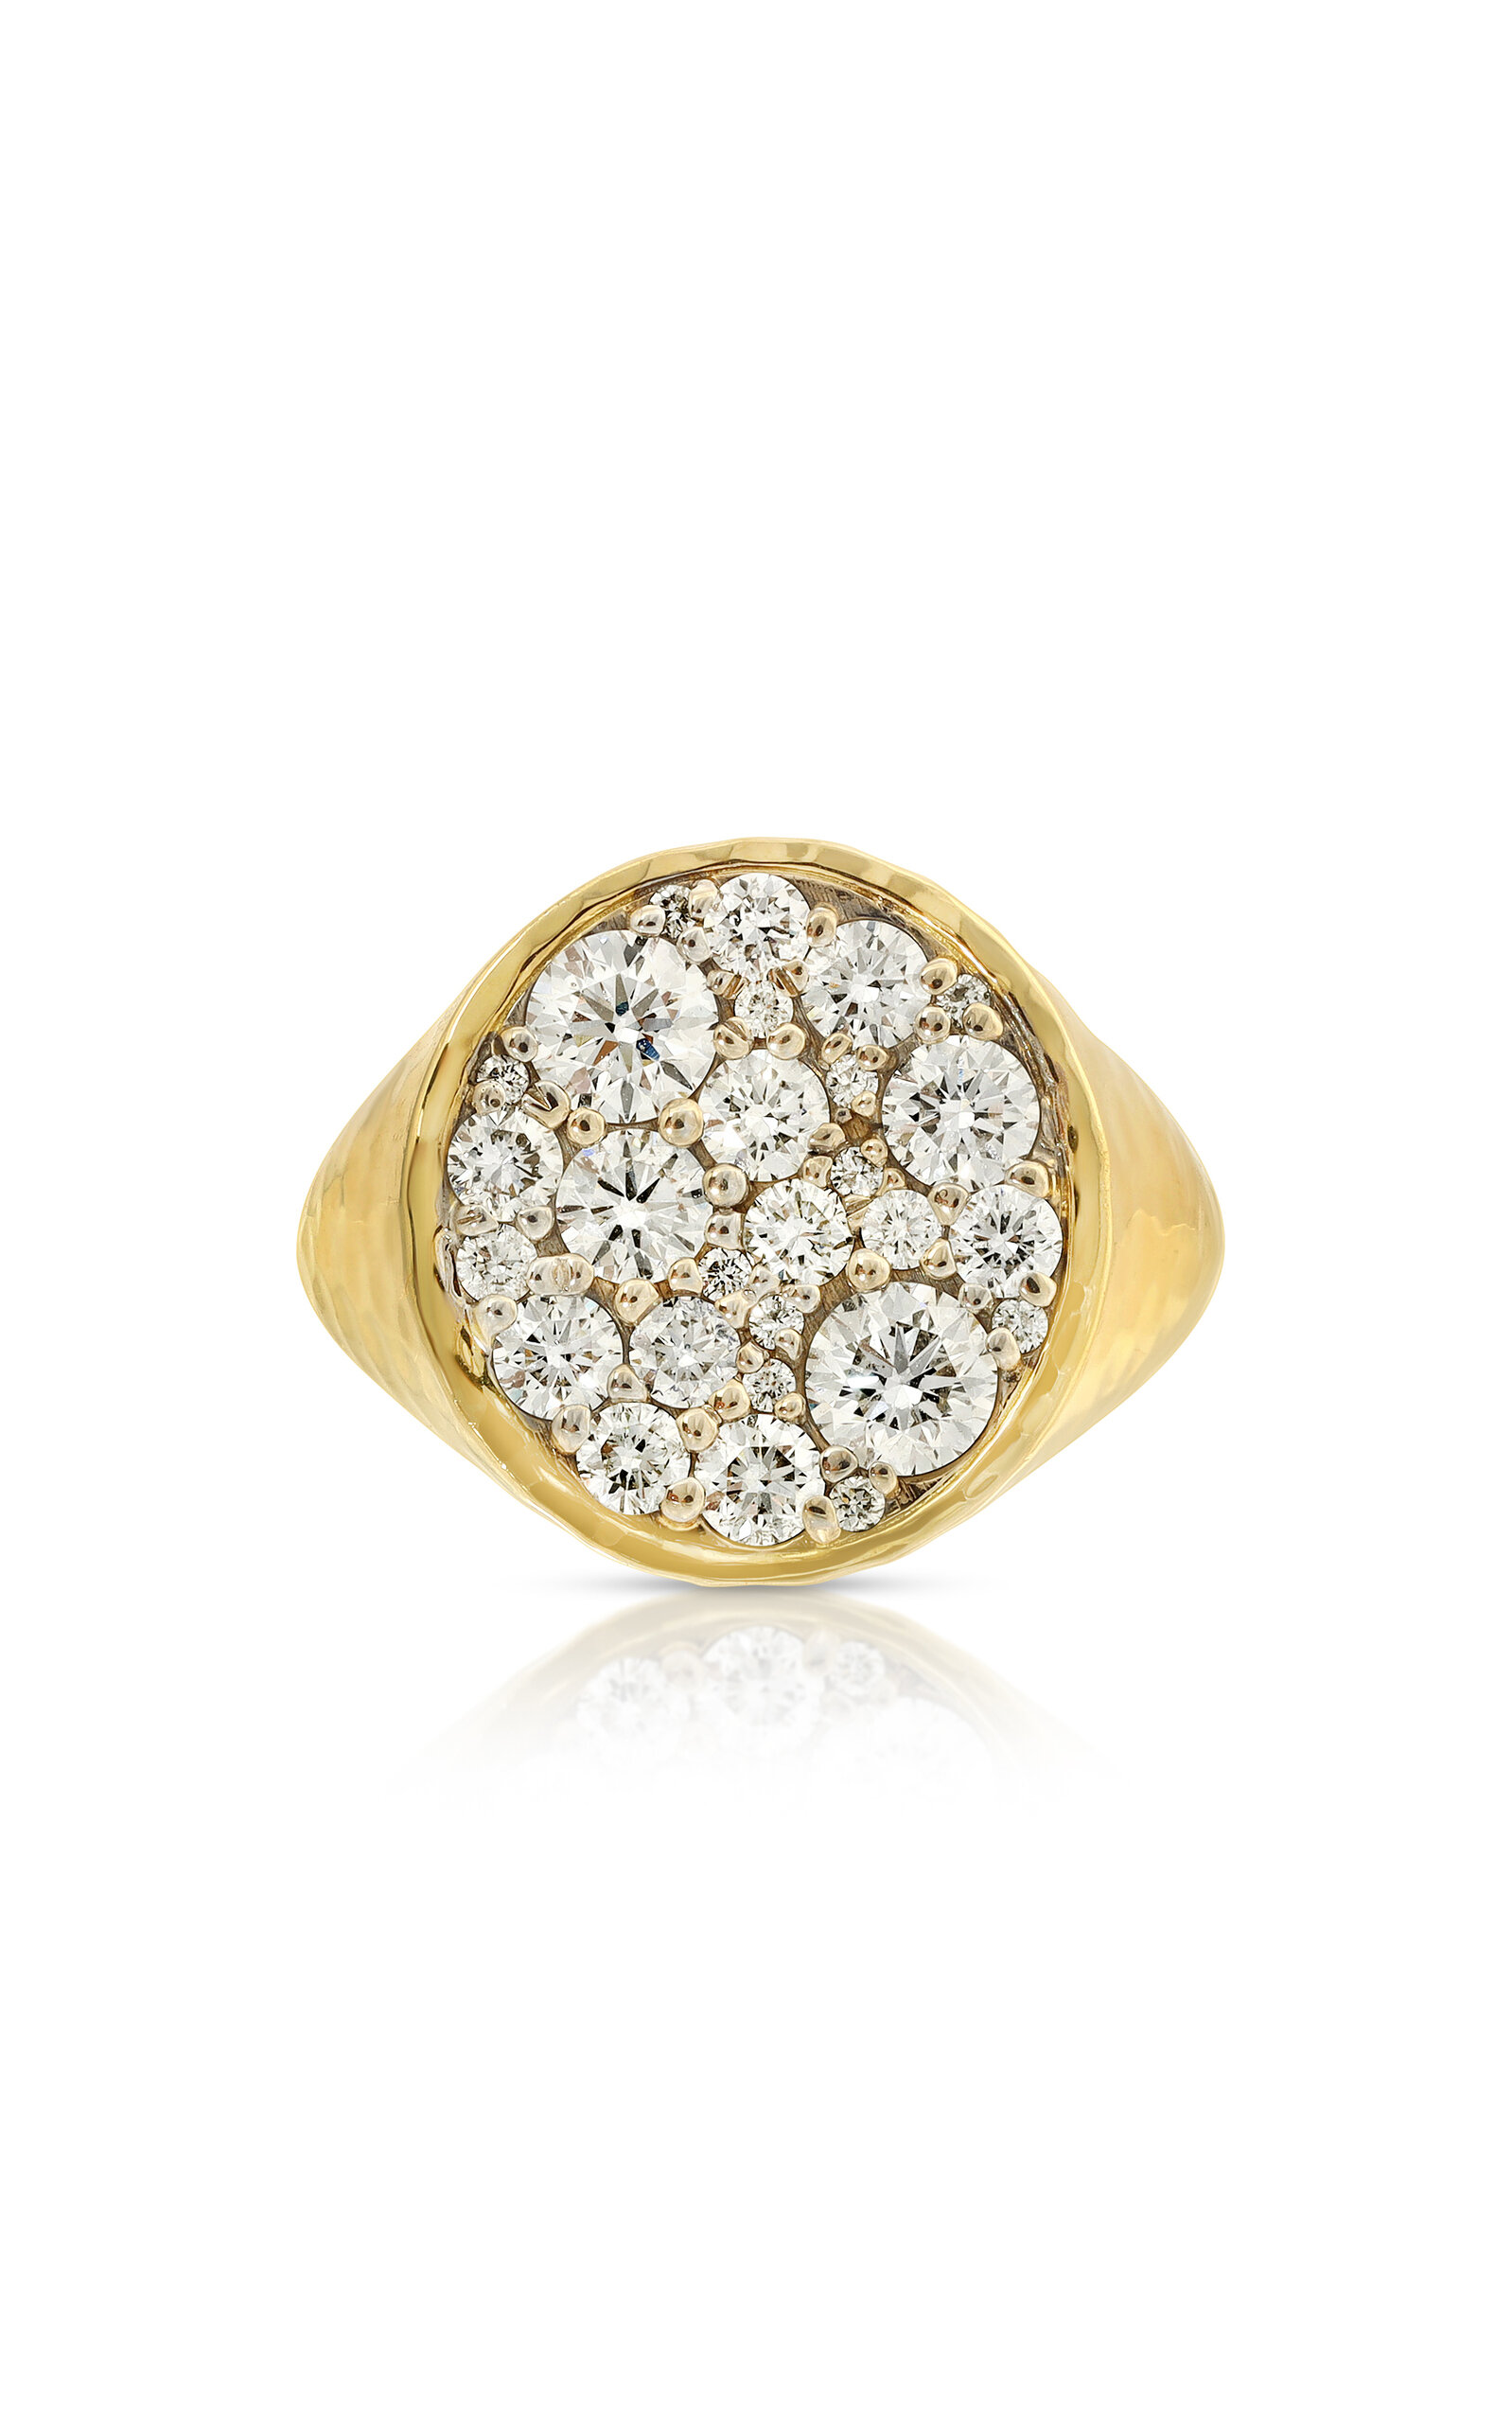 OCTAVIA ELIZABETH WOMEN'S 18K YELLOW GOLD THE OCTAVIA DIAMOND SIGNET RING